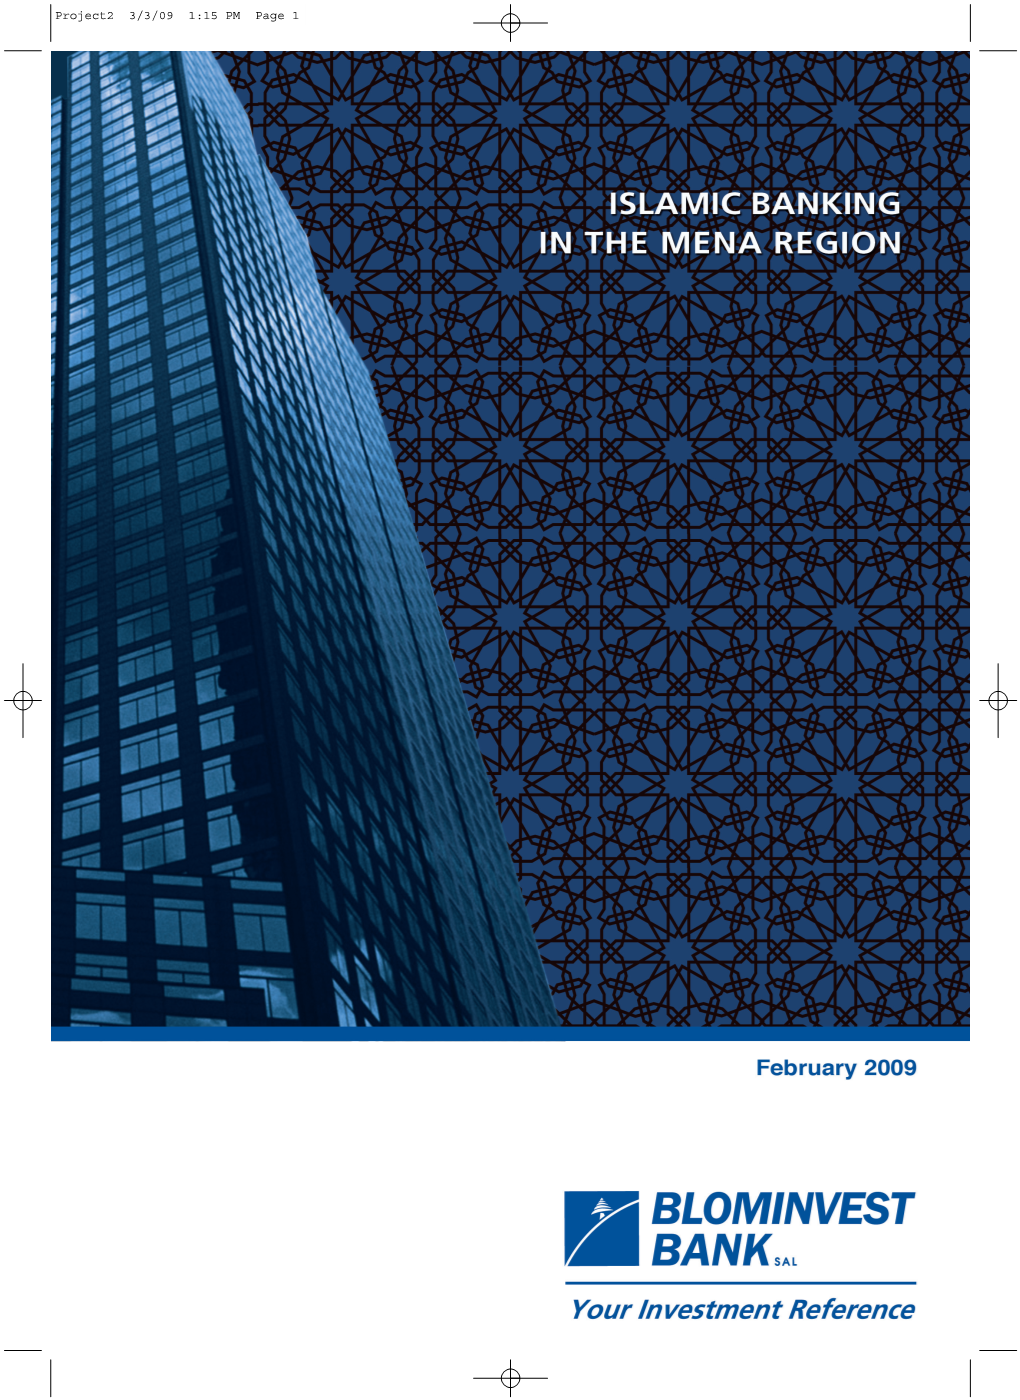 Project2 3/3/09 1:15 PM Page 1 Islamic Bankingislamic in Banking the MENA in Region the MENA Region